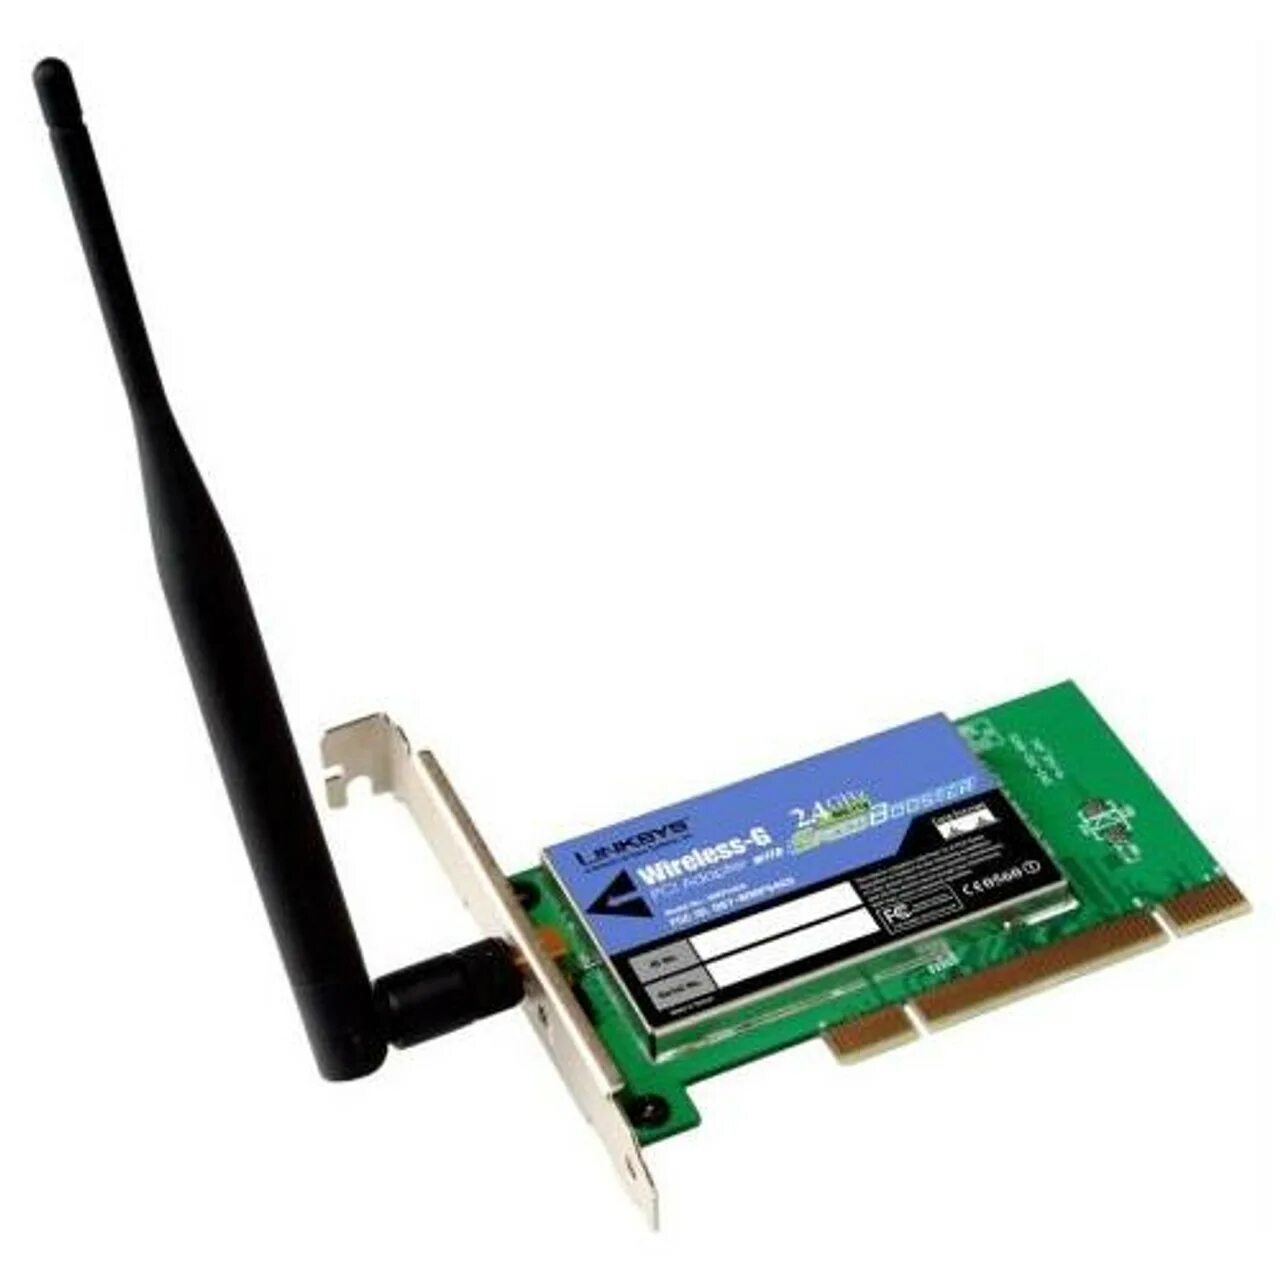 Сетевая карта для 7. Linksys wmp54g v4.1 Wireless-g PCI Adapter. Wi-Fi адаптер Linksys wga54g. Broadcom 802.11g Network Adapter. Wi-Fi адаптер Linksys wusb600n.